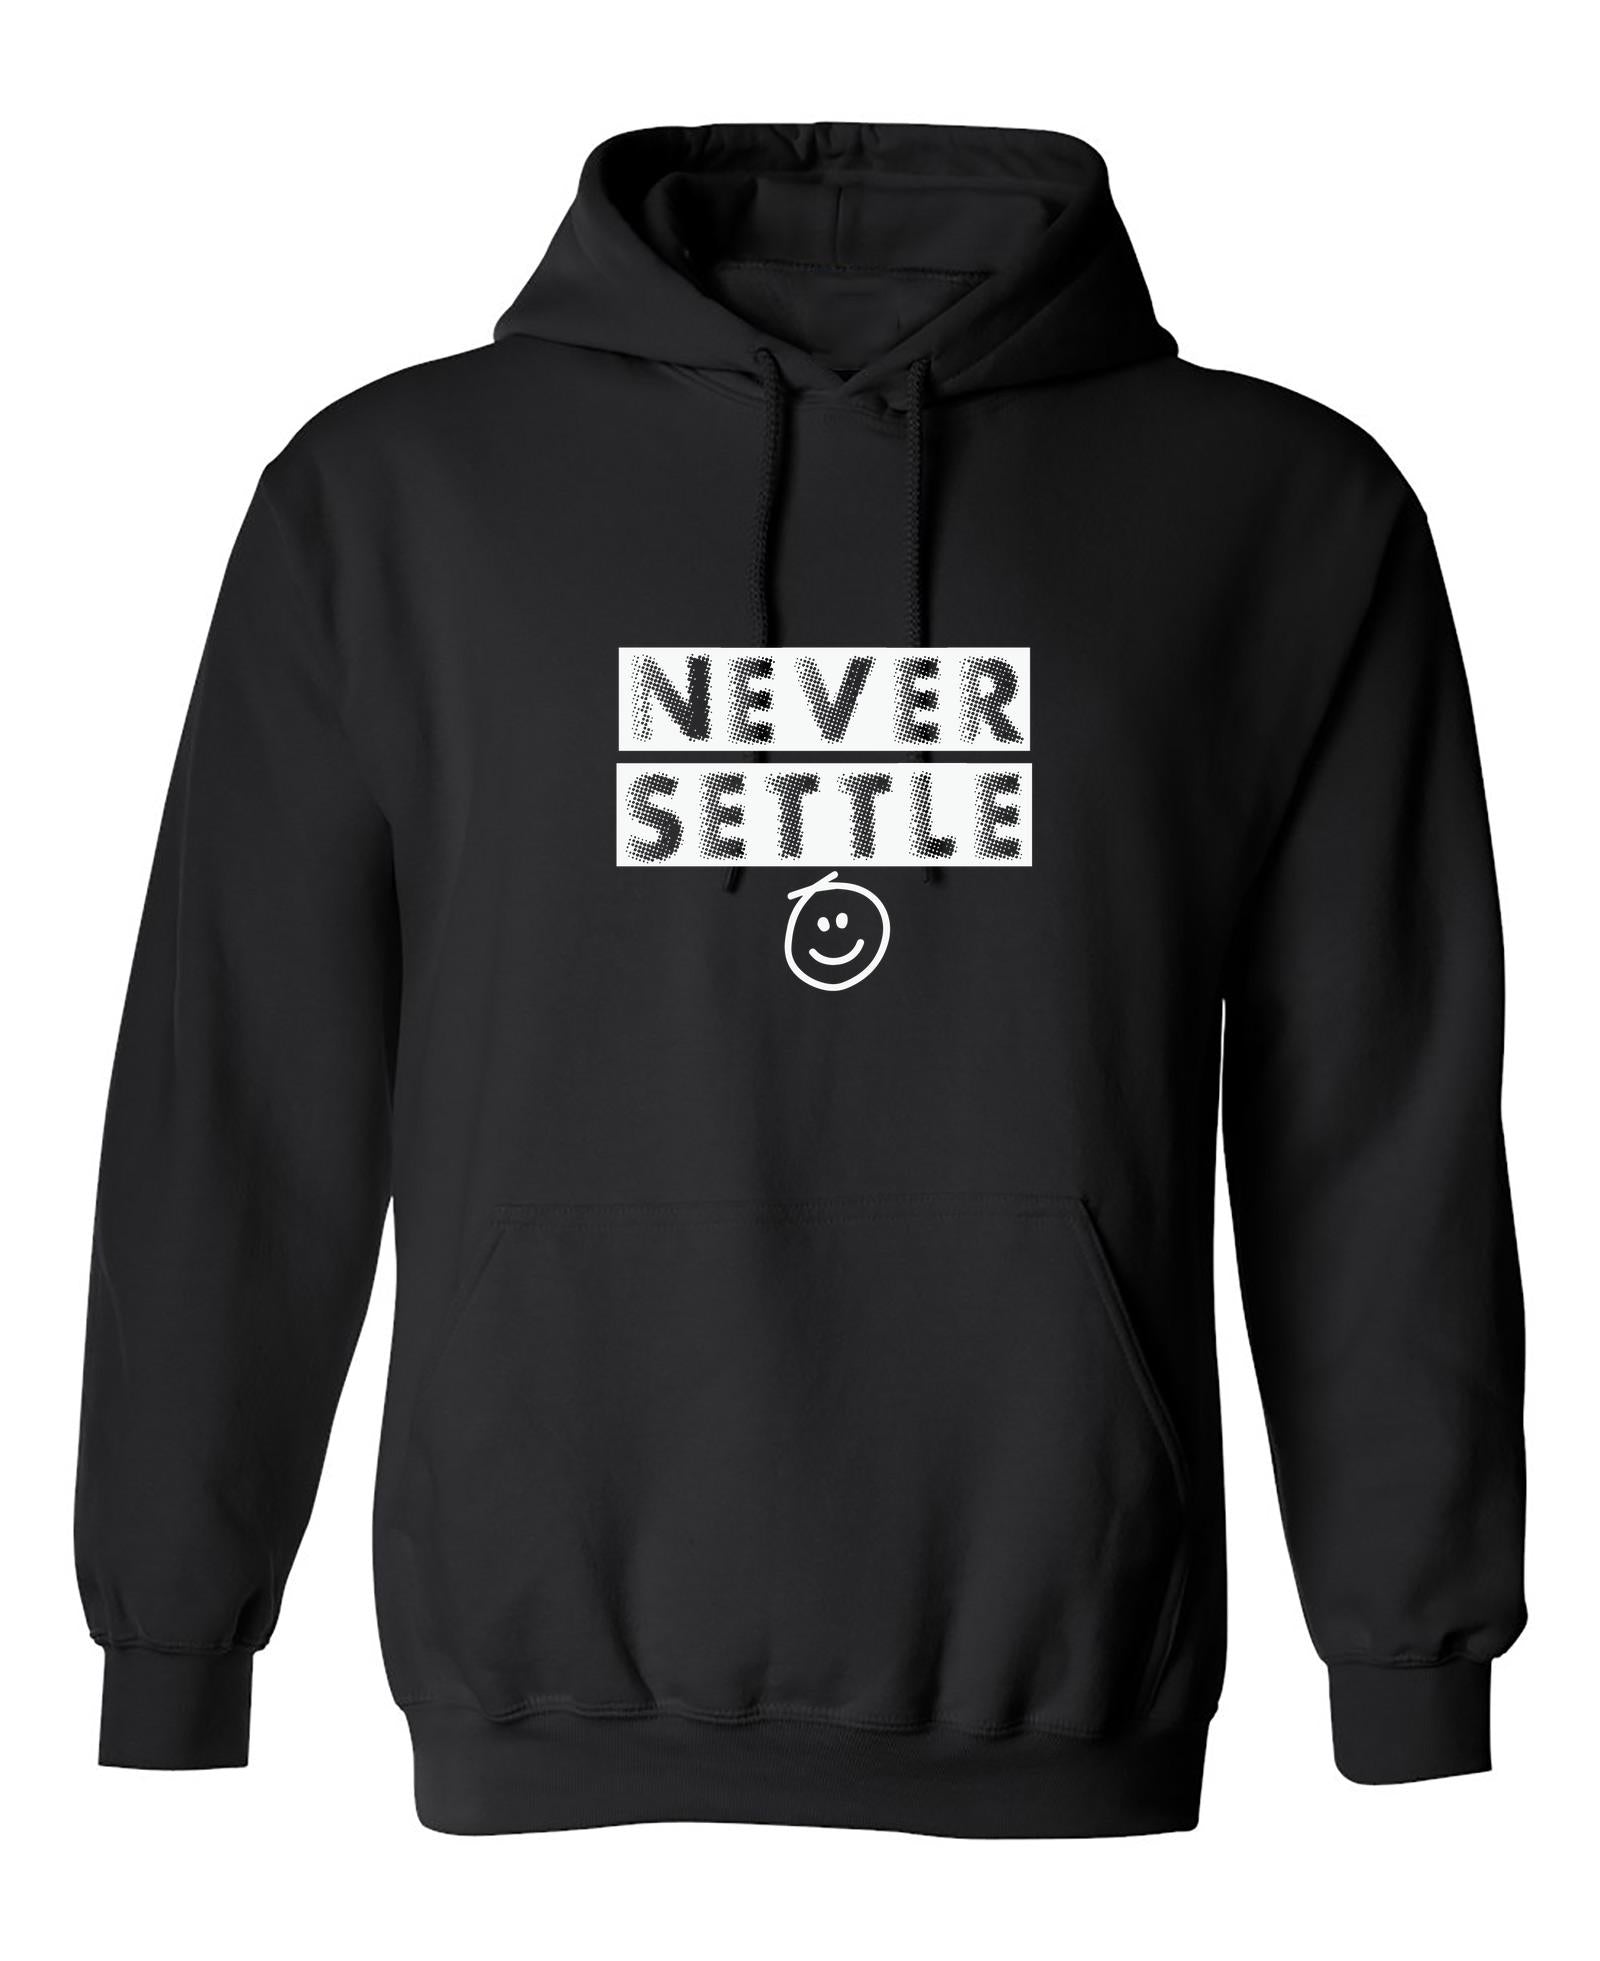 Funny T-Shirts design "Never Settle"